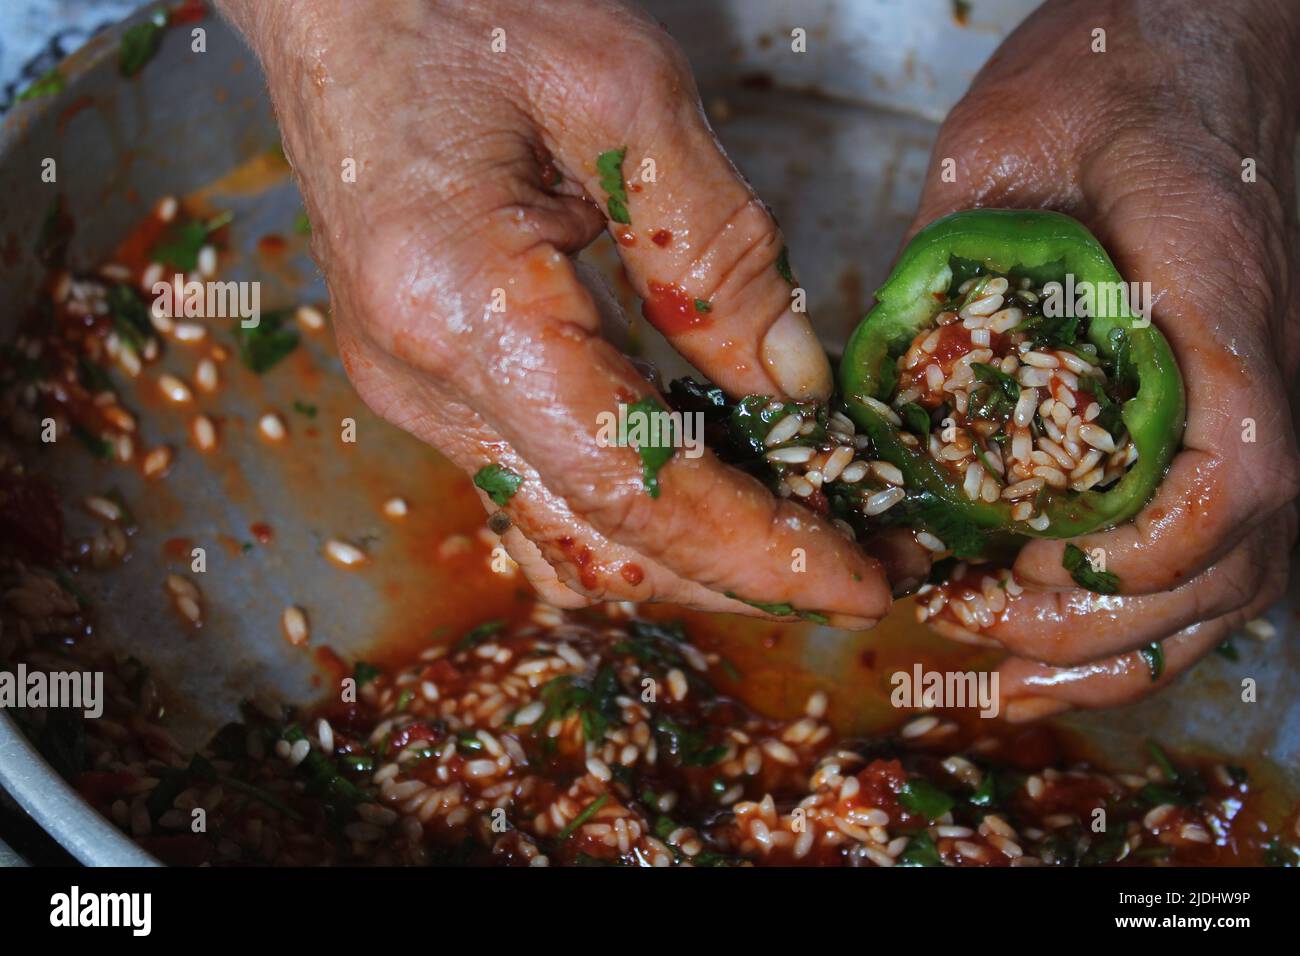 Woman hands preparing peppers stuffed with rice ingredient. Greek or Turkish food biber dolmasi preparation close up. Fresh aegean food photography in Turkey. Stock Photo